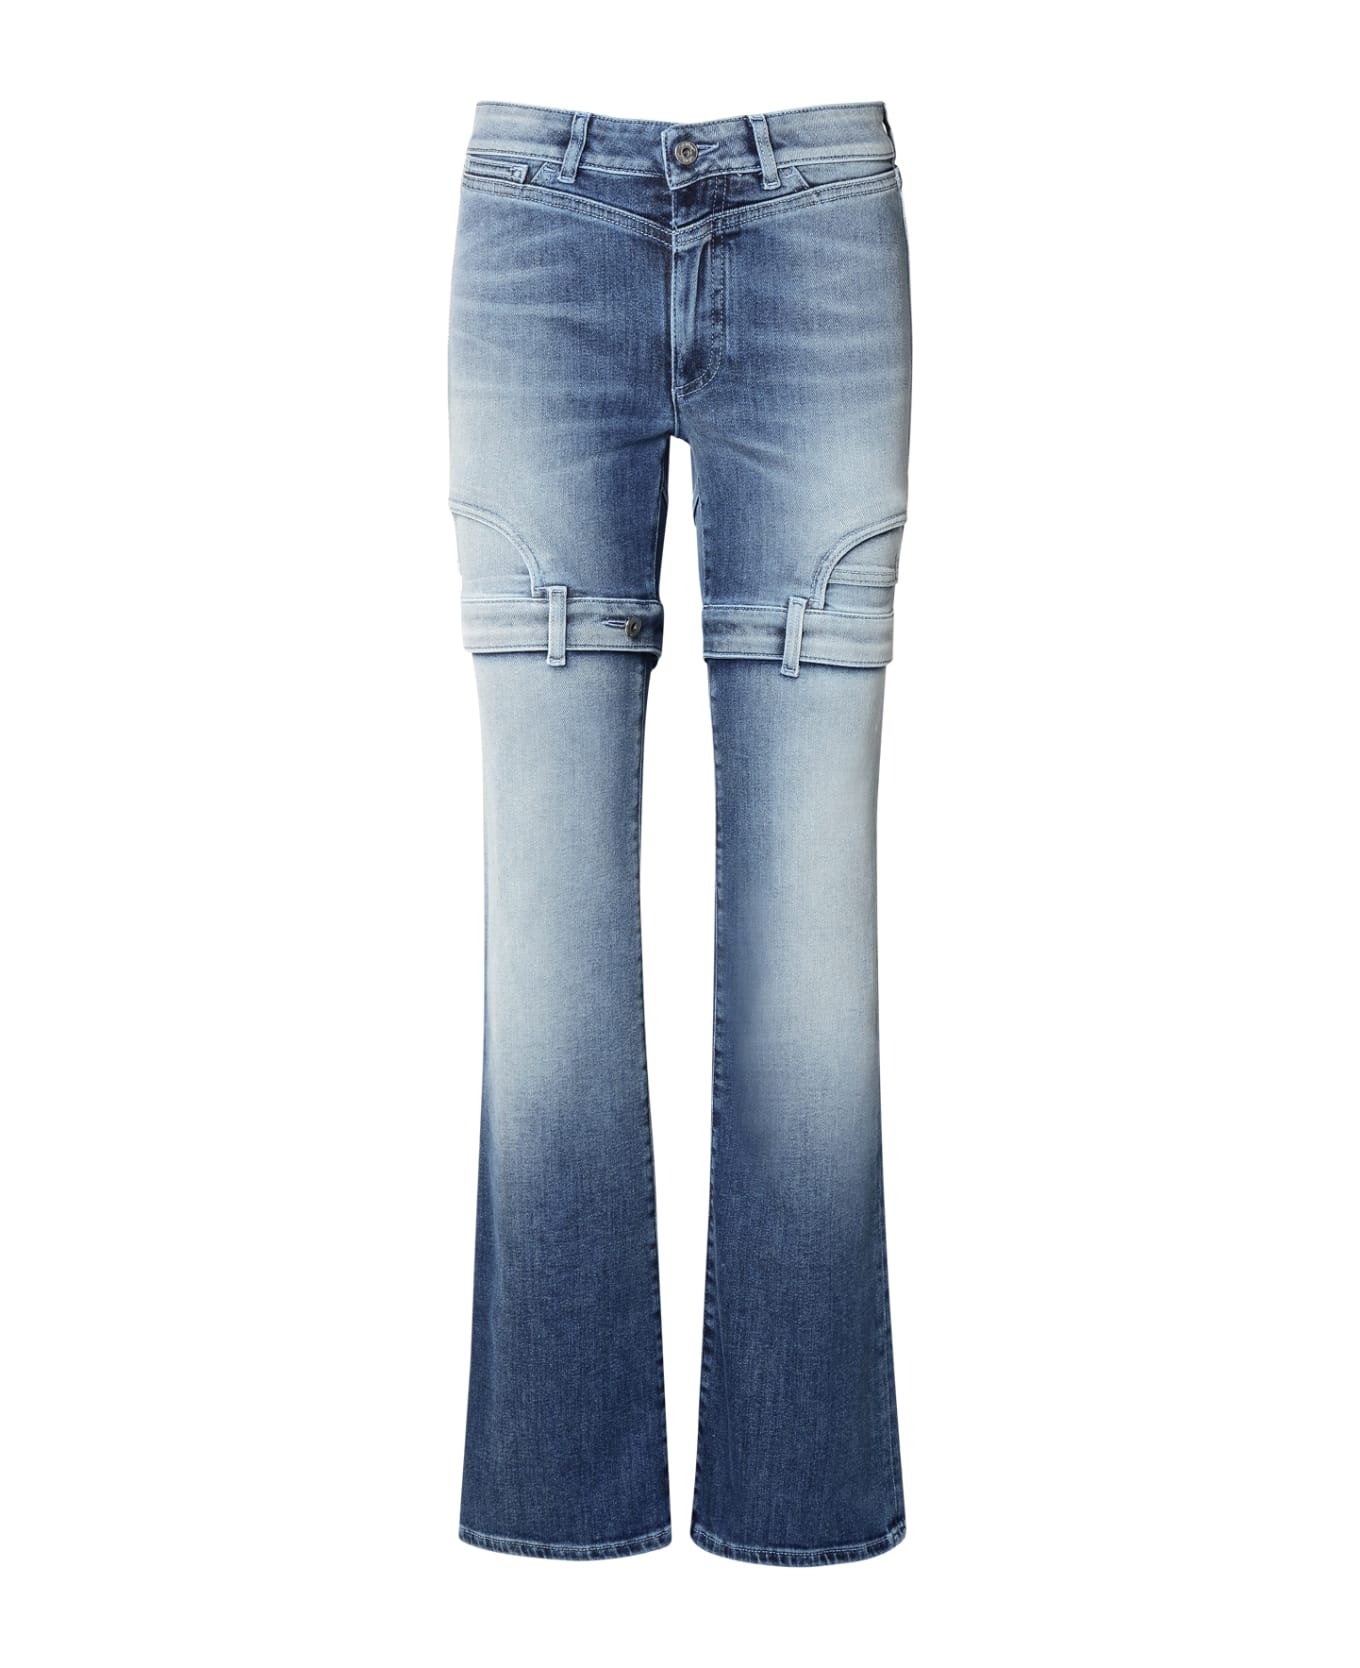 Off-White Cotton Jeans - Light Blue